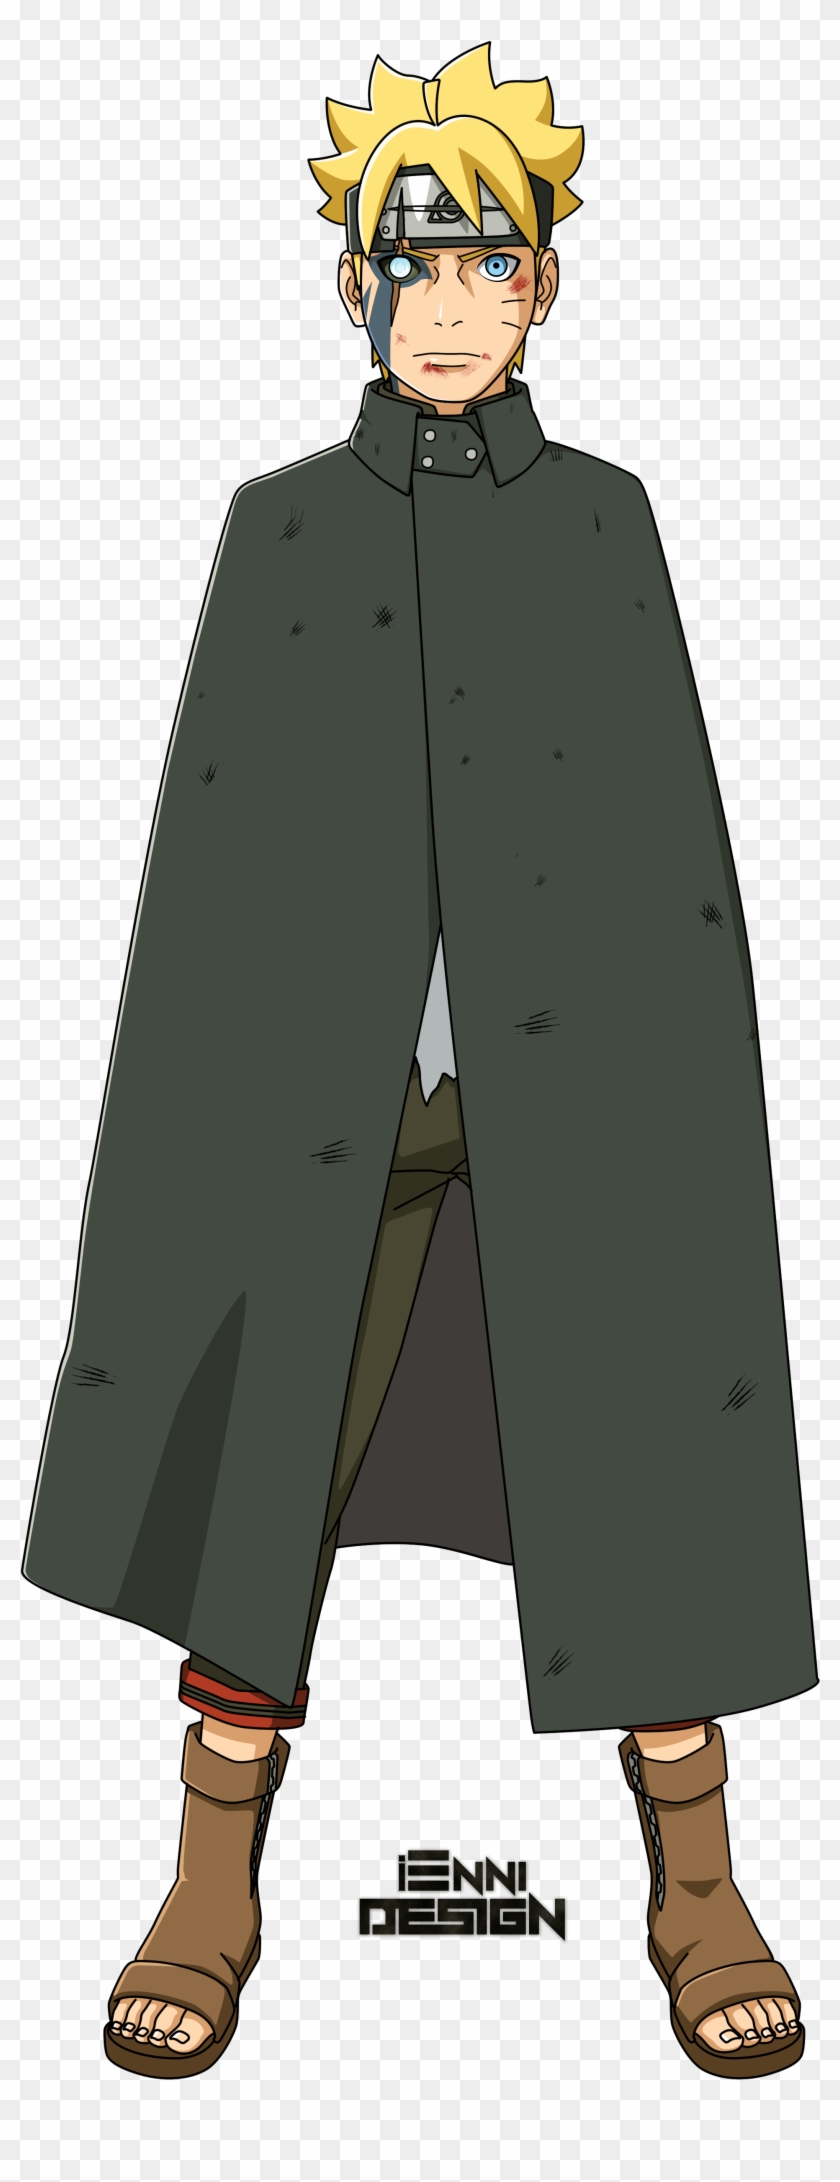 Boruto: Naruto the MovieNaruto Uzumaki (Hokage) by iEnniDesign